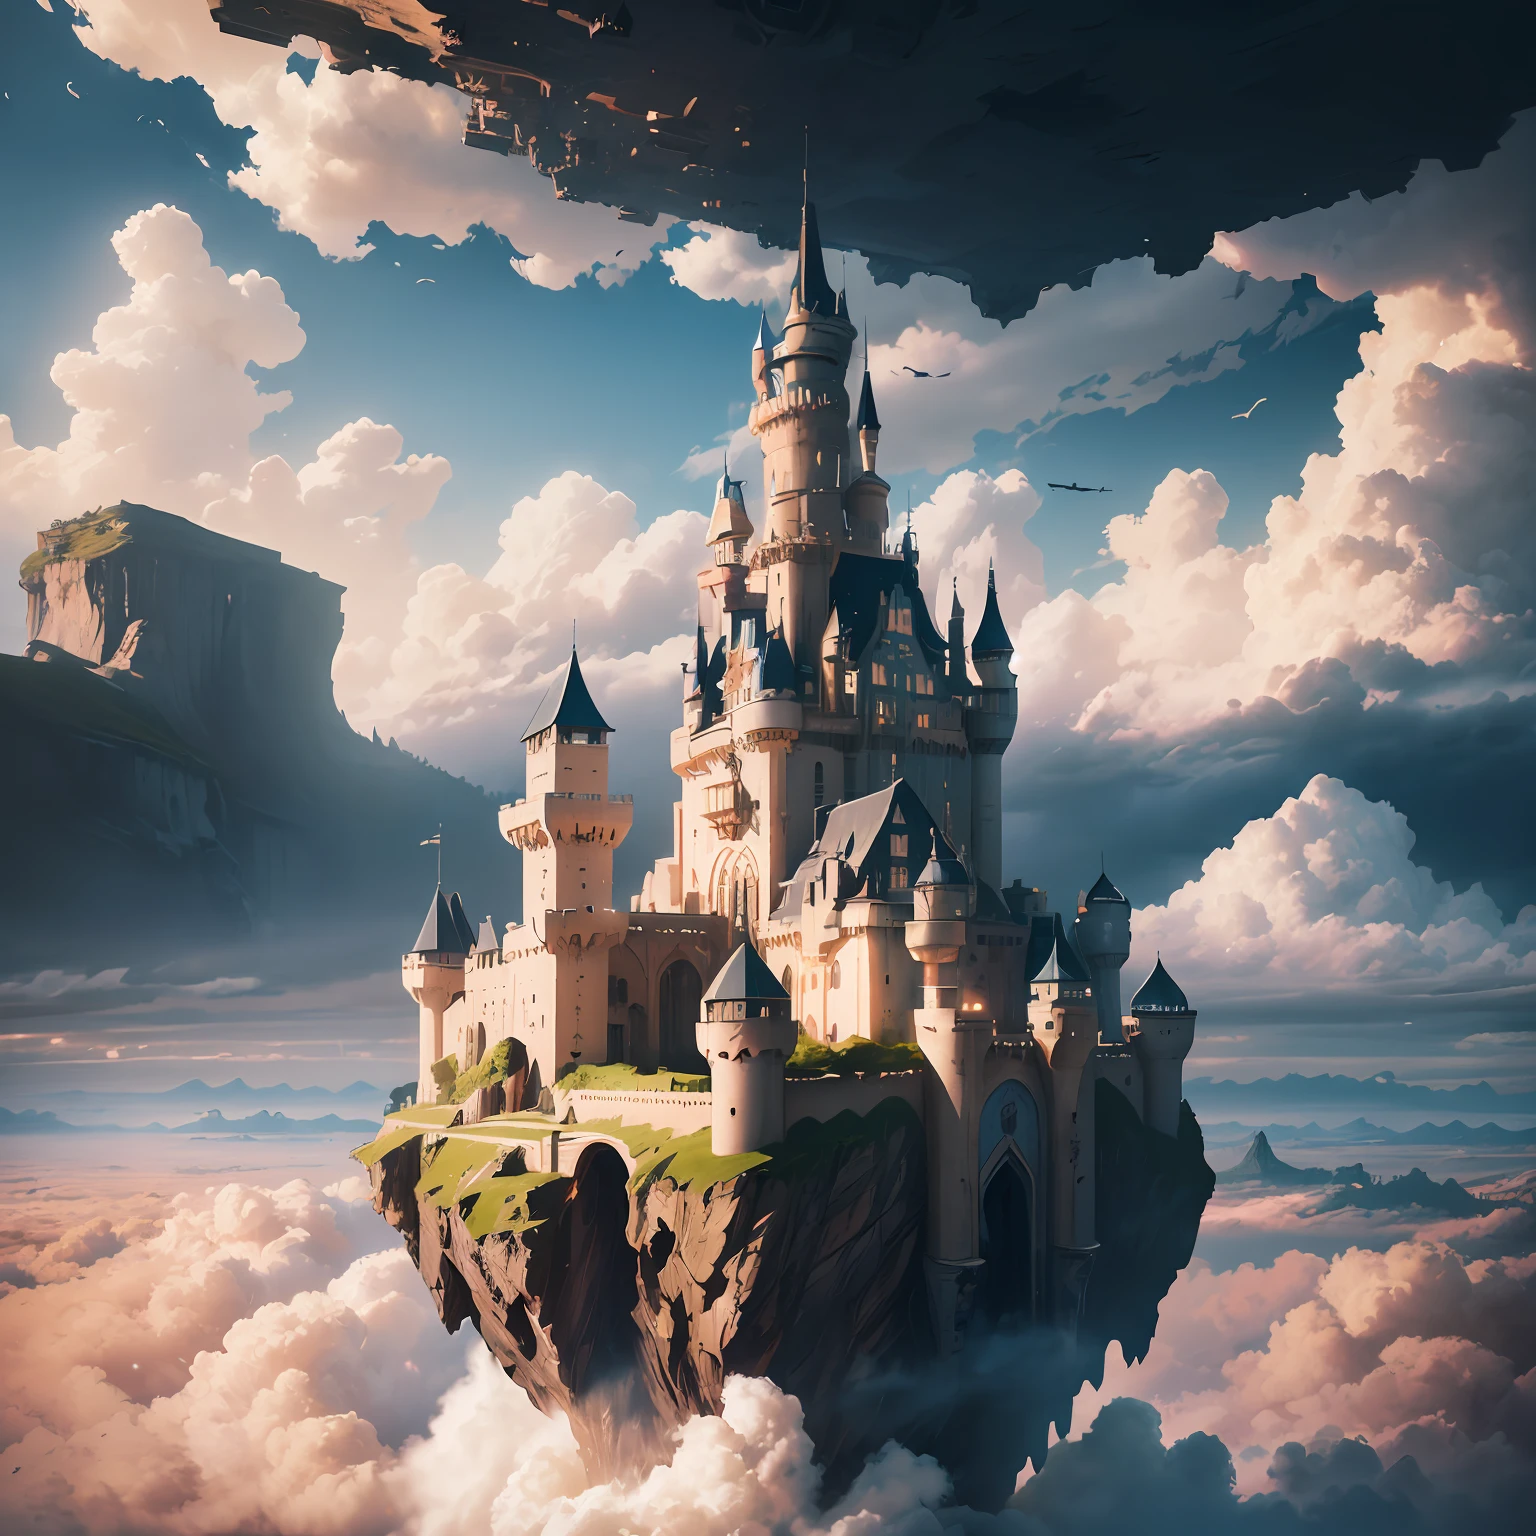 "there's an island floating in the sky among the 구름 with castle on it, 성에는 장비와 기계 부품이 가득합니다" 하늘의 성, 떠다니는 성, 구름, (영화 같은, 8K, 걸작, 영광스러운 배경, 동적 조명, 축소, 극도로 높은 디테일, 매혹적인 풍경 전망)